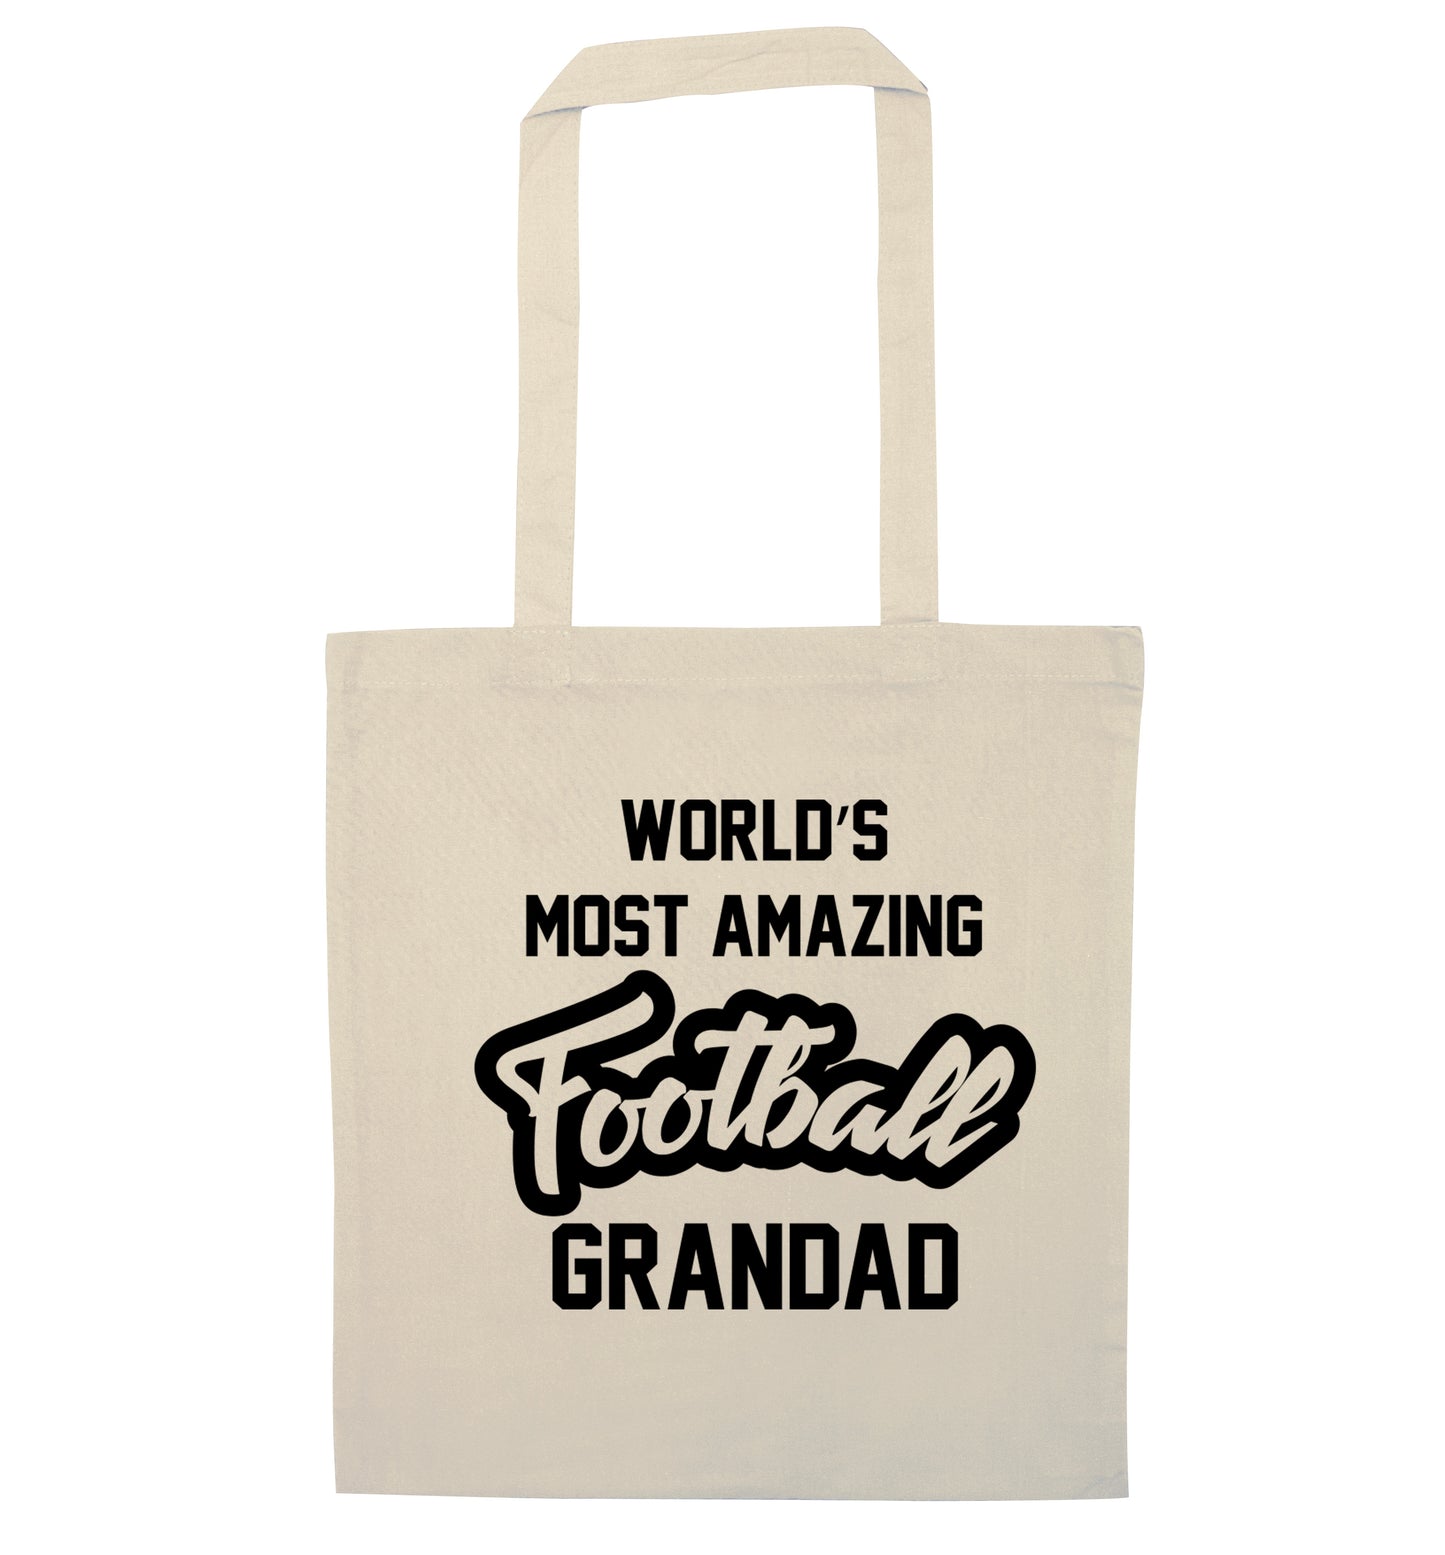 Worlds most amazing football grandad natural tote bag